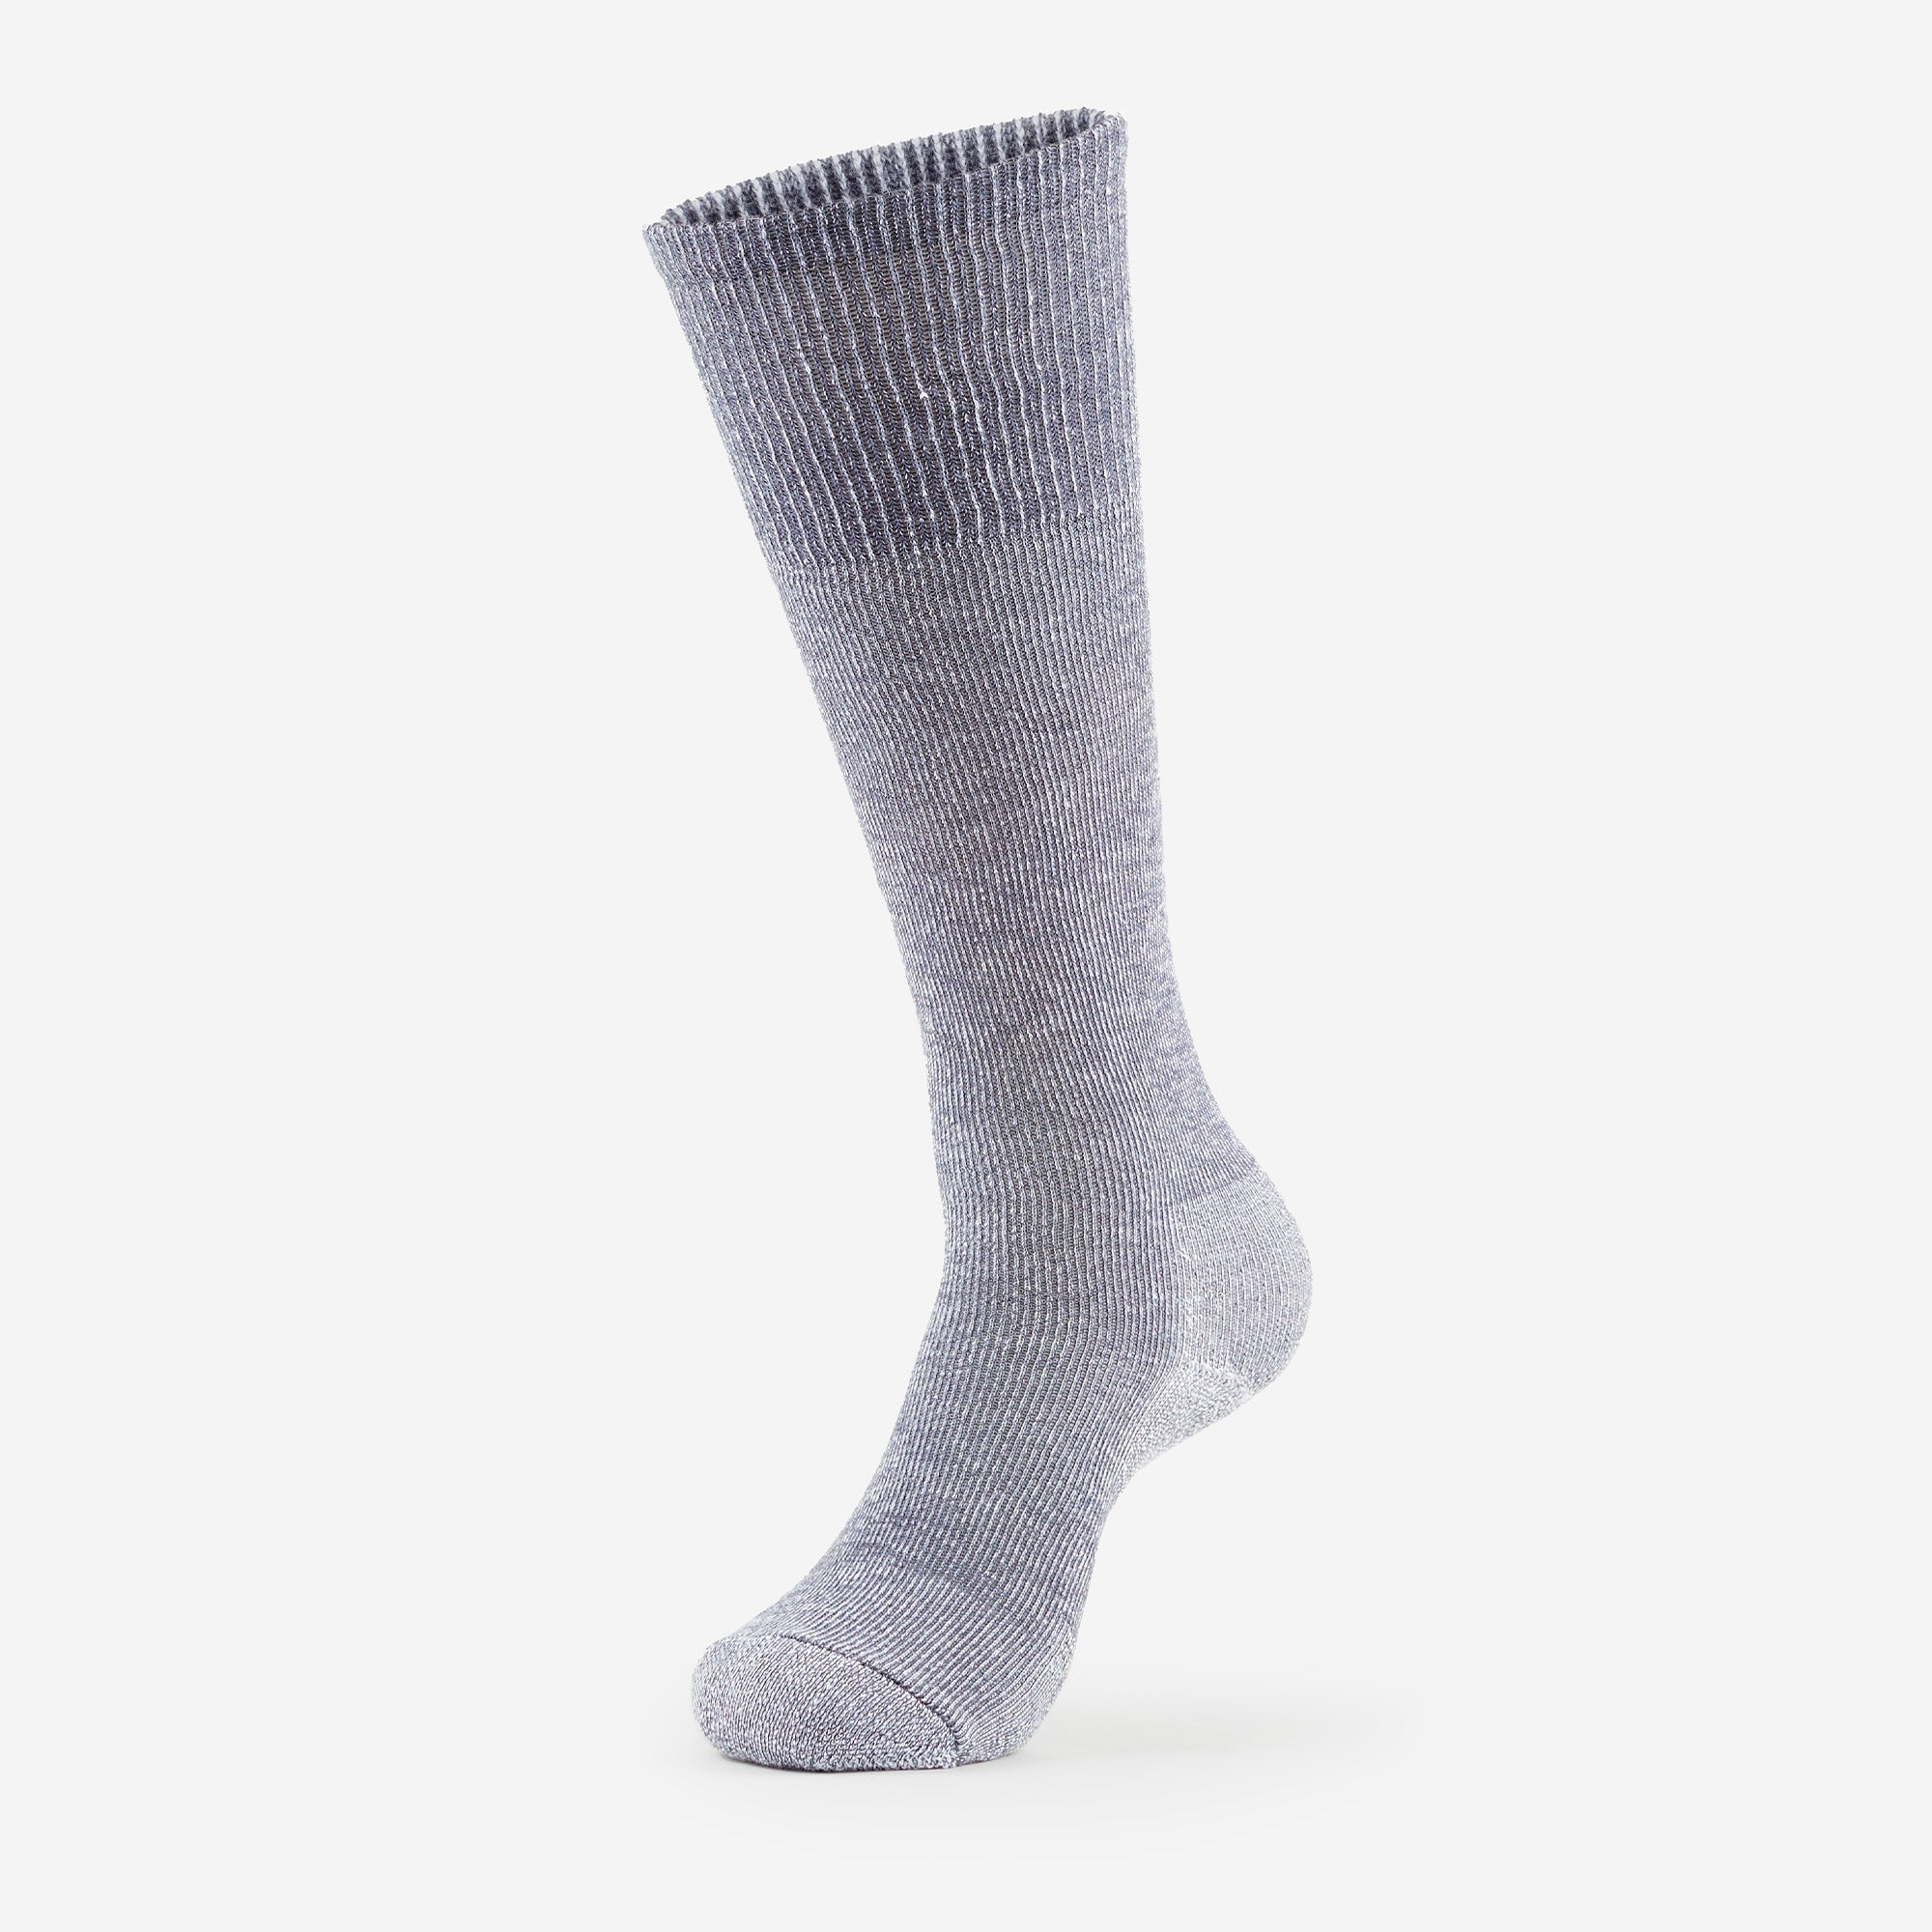  PCEAIIH Women's Lightweight Hiking Socks Size 6-9  Black/White/Grey (3 Pairs) : Clothing, Shoes & Jewelry